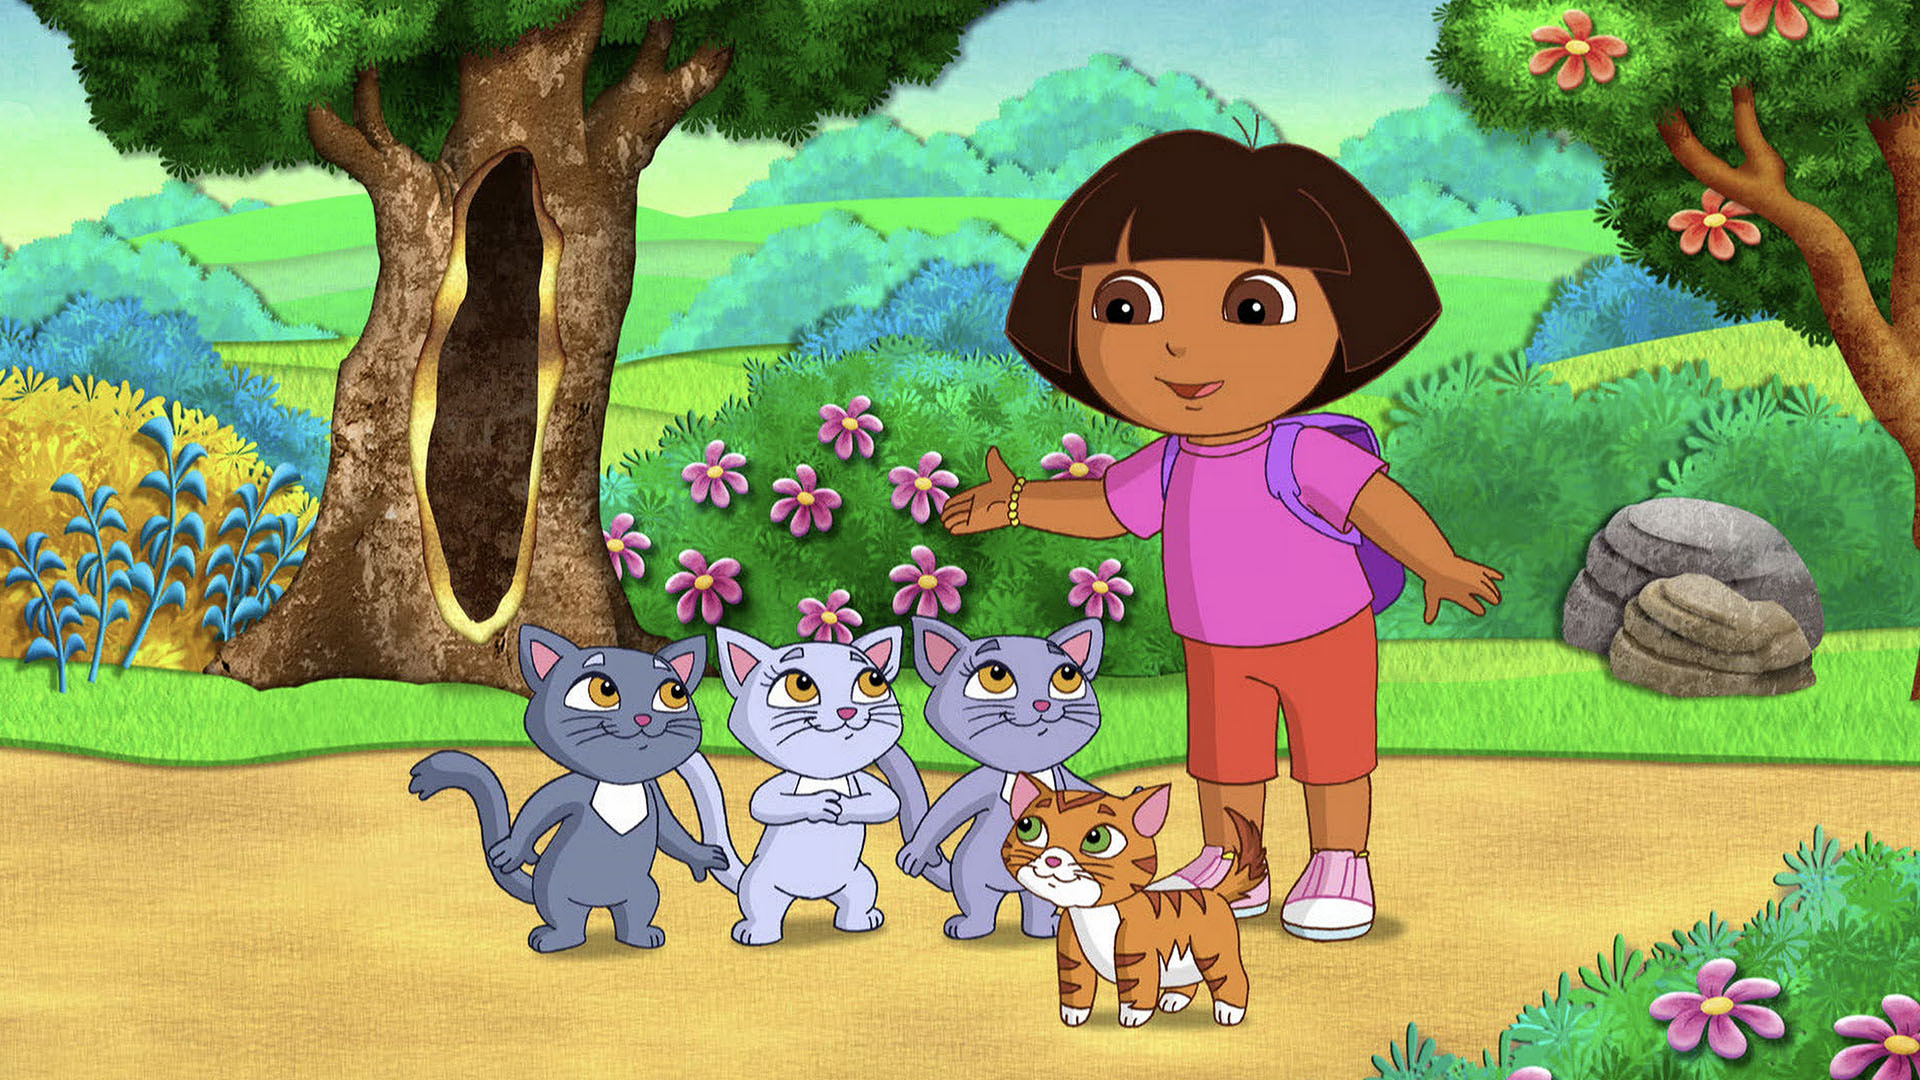 Watch Dora The Explorer Season 8 Episode 4 Dora The Explorer Kittens In Mittens Full Show